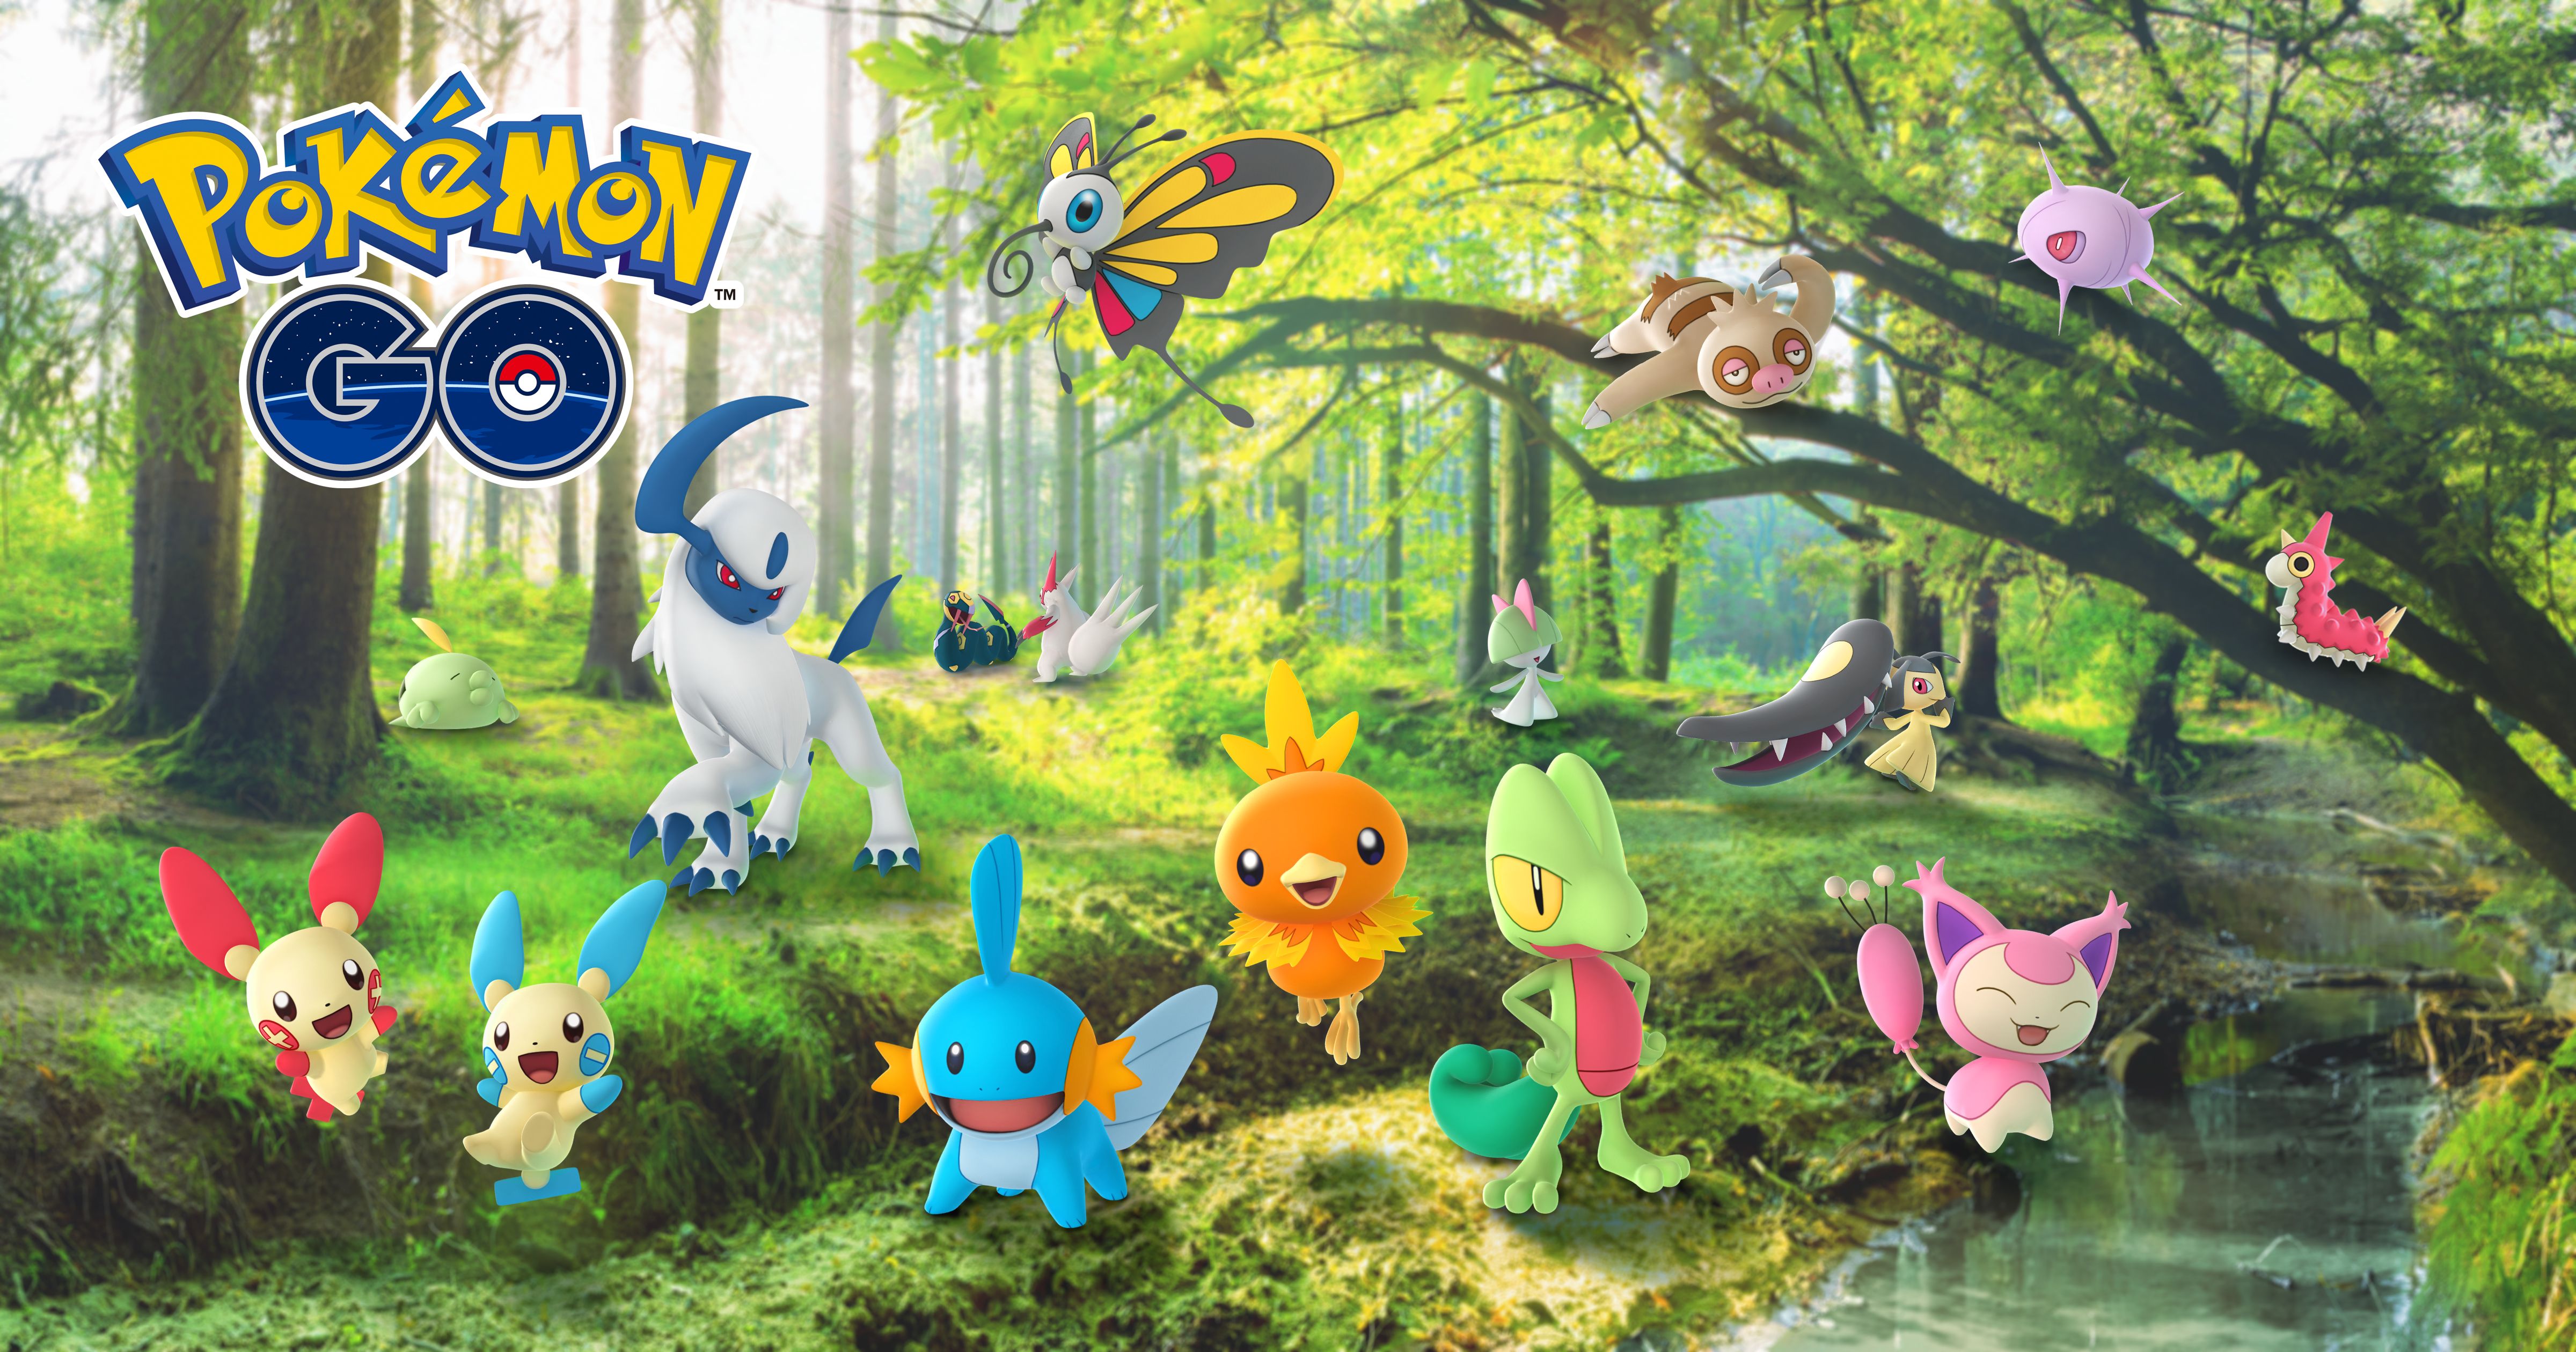 Mega Charizard Y Raid Guide For Pokémon GO Players: May 2021